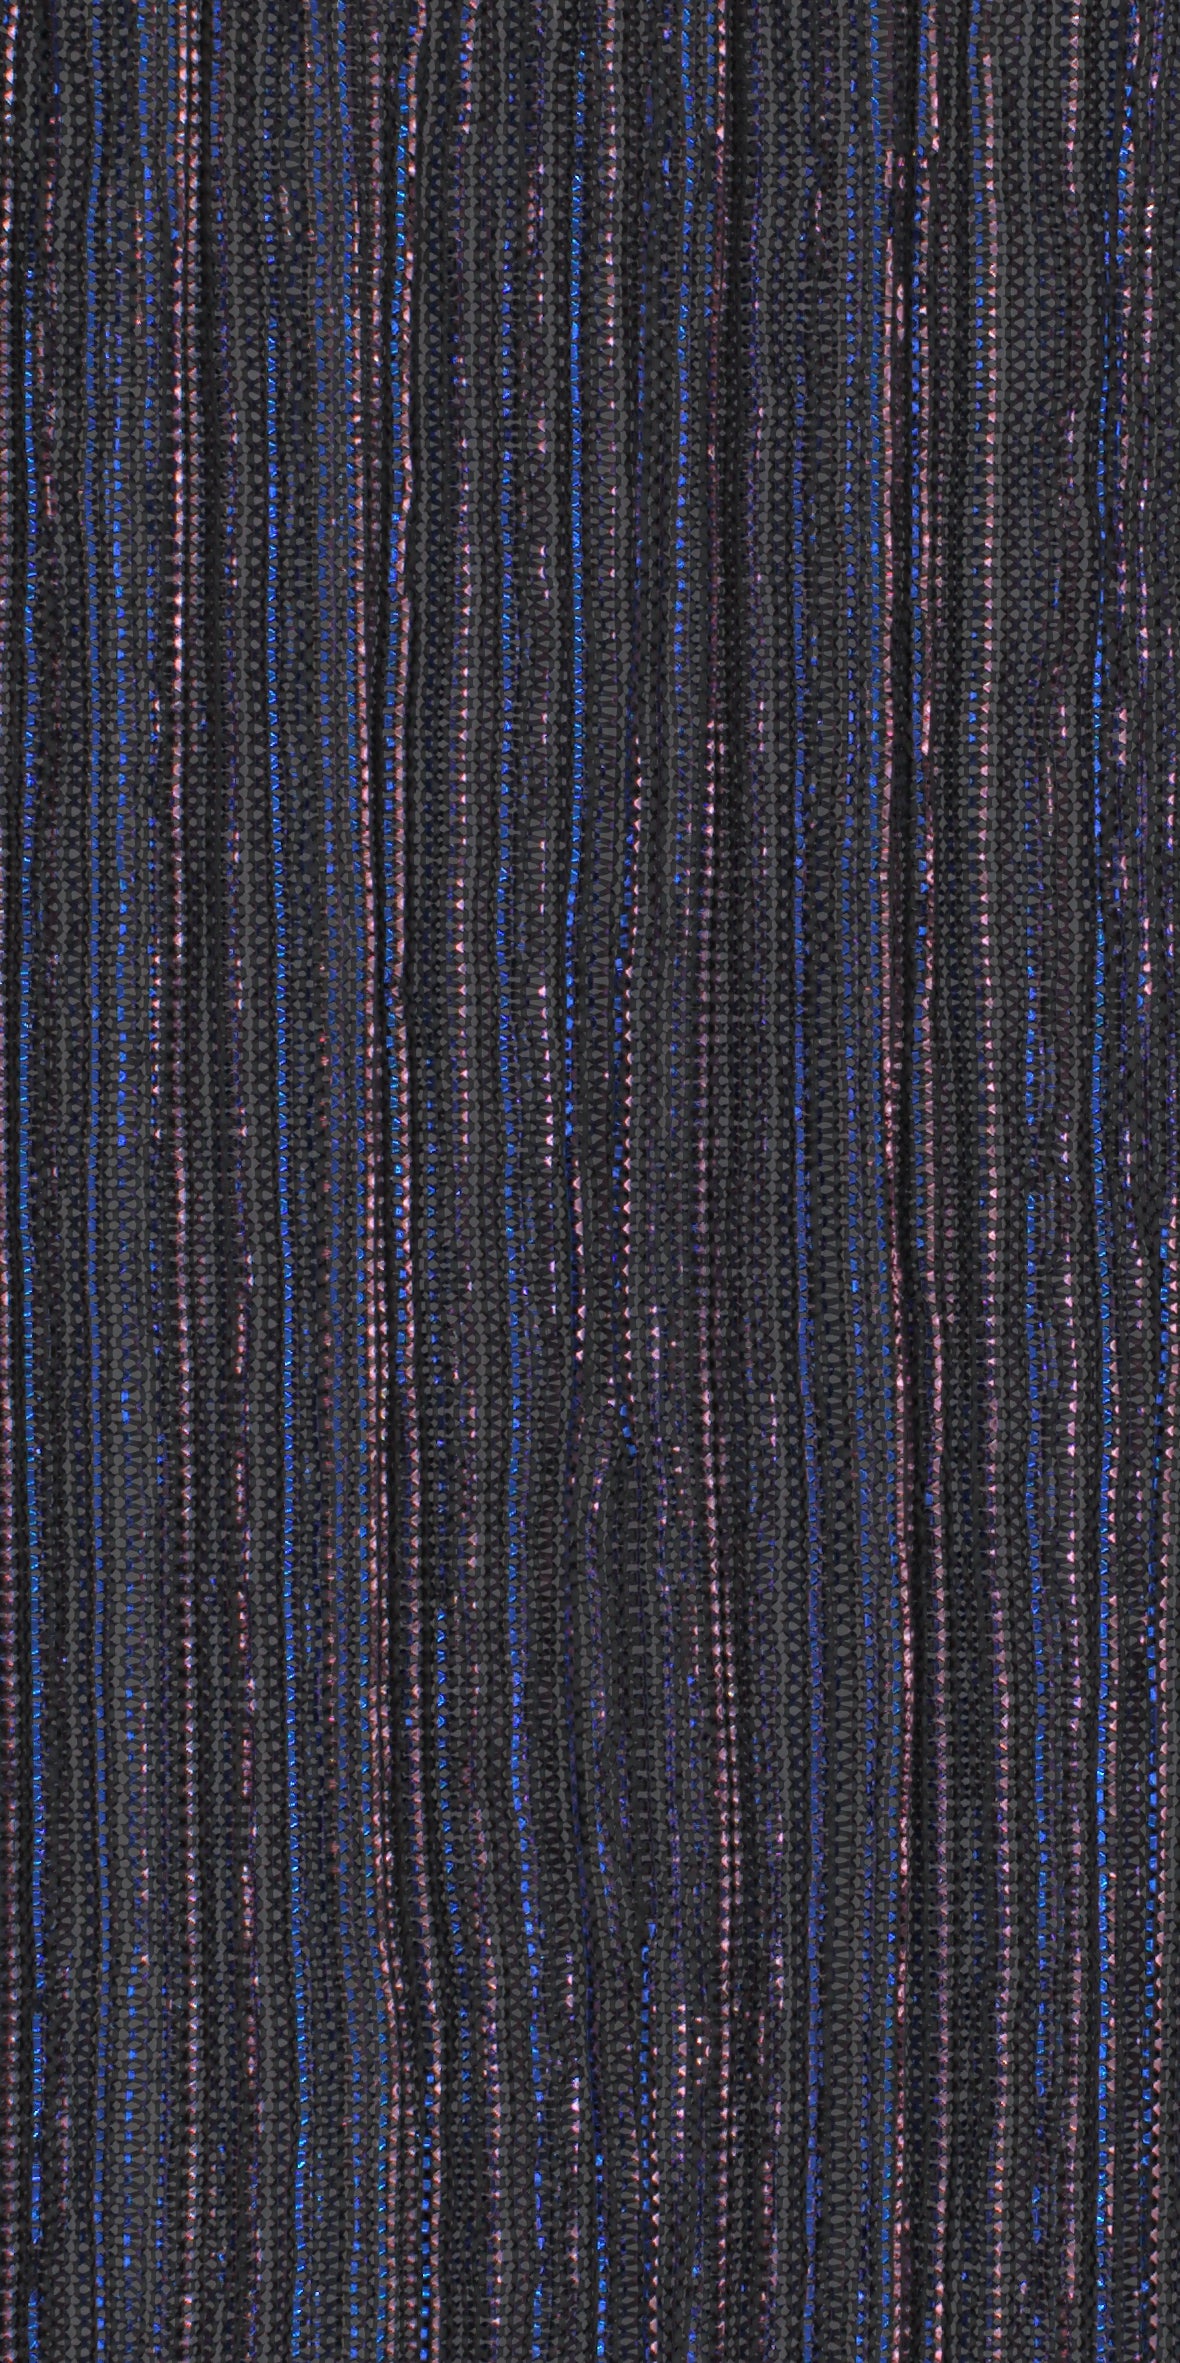 12006-04 Blue Violet Light Purple Metallic Pleat Plain Dyed Blend 126g/yd 56&quot; blend knit metallic plain dyed pleat ppl new purple Metallic, Pleat - knit fabric - woven fabric - fabric company - fabric wholesale - fabric b2b - fabric factory - high quality fabric - hong kong fabric - fabric hk - acetate fabric - cotton fabric - linen fabric - metallic fabric - nylon fabric - polyester fabric - spandex fabric - chun wing hing - cwh hk - fabric worldwide ship - 針織布 - 梳織布 - 布料公司- 布料批發 - 香港布料 - 秦榮興